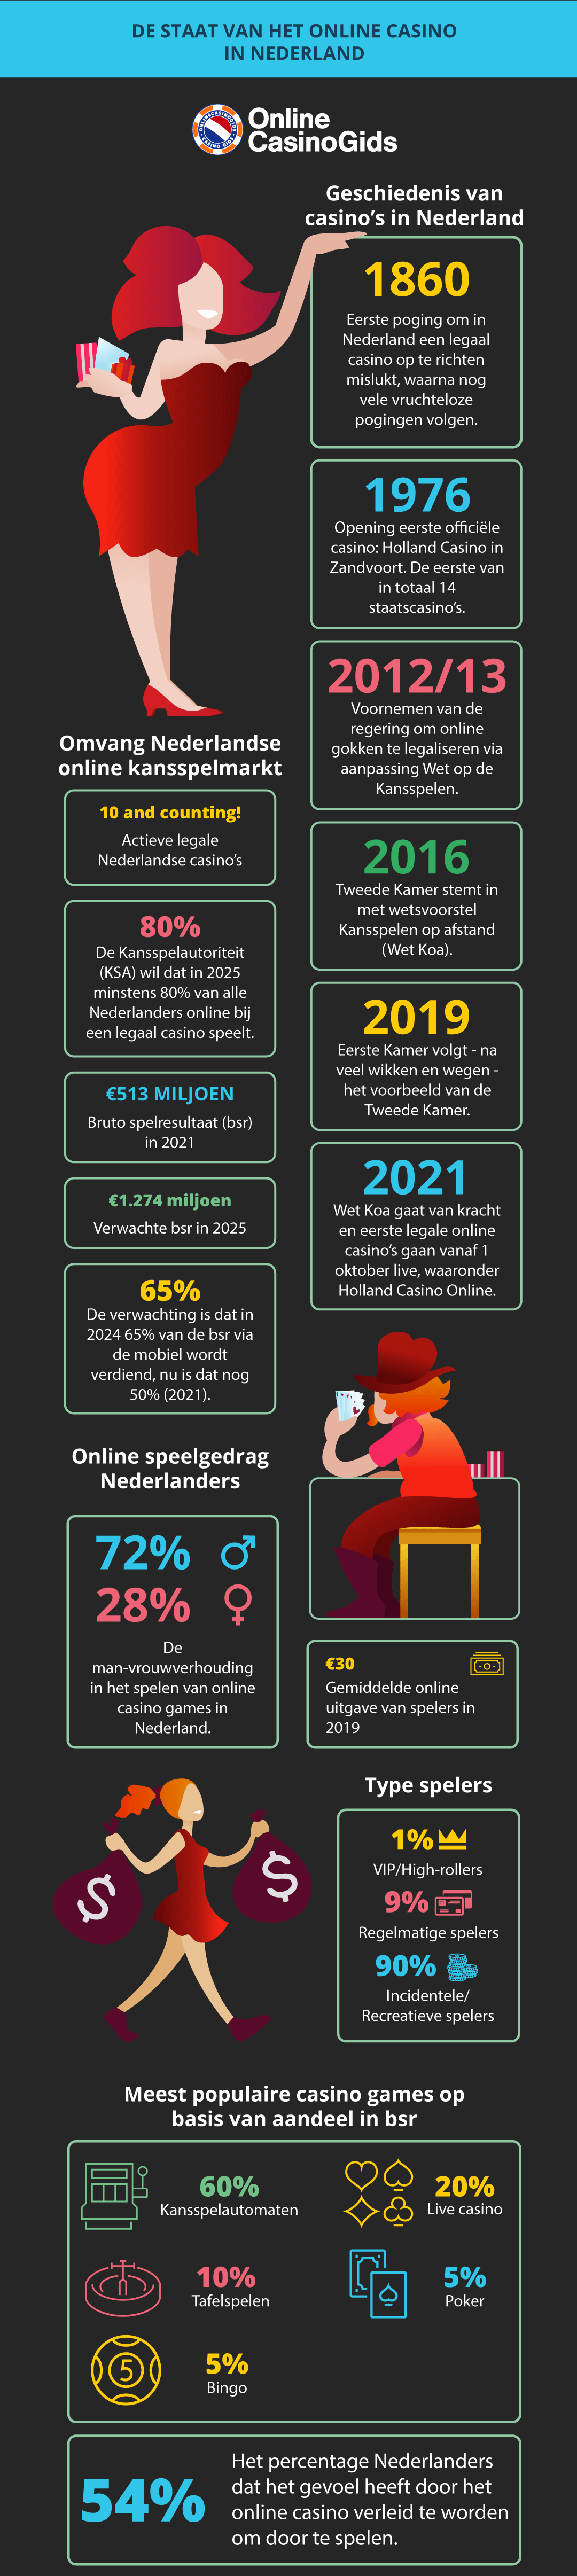 Keadaan kasino online Belanda